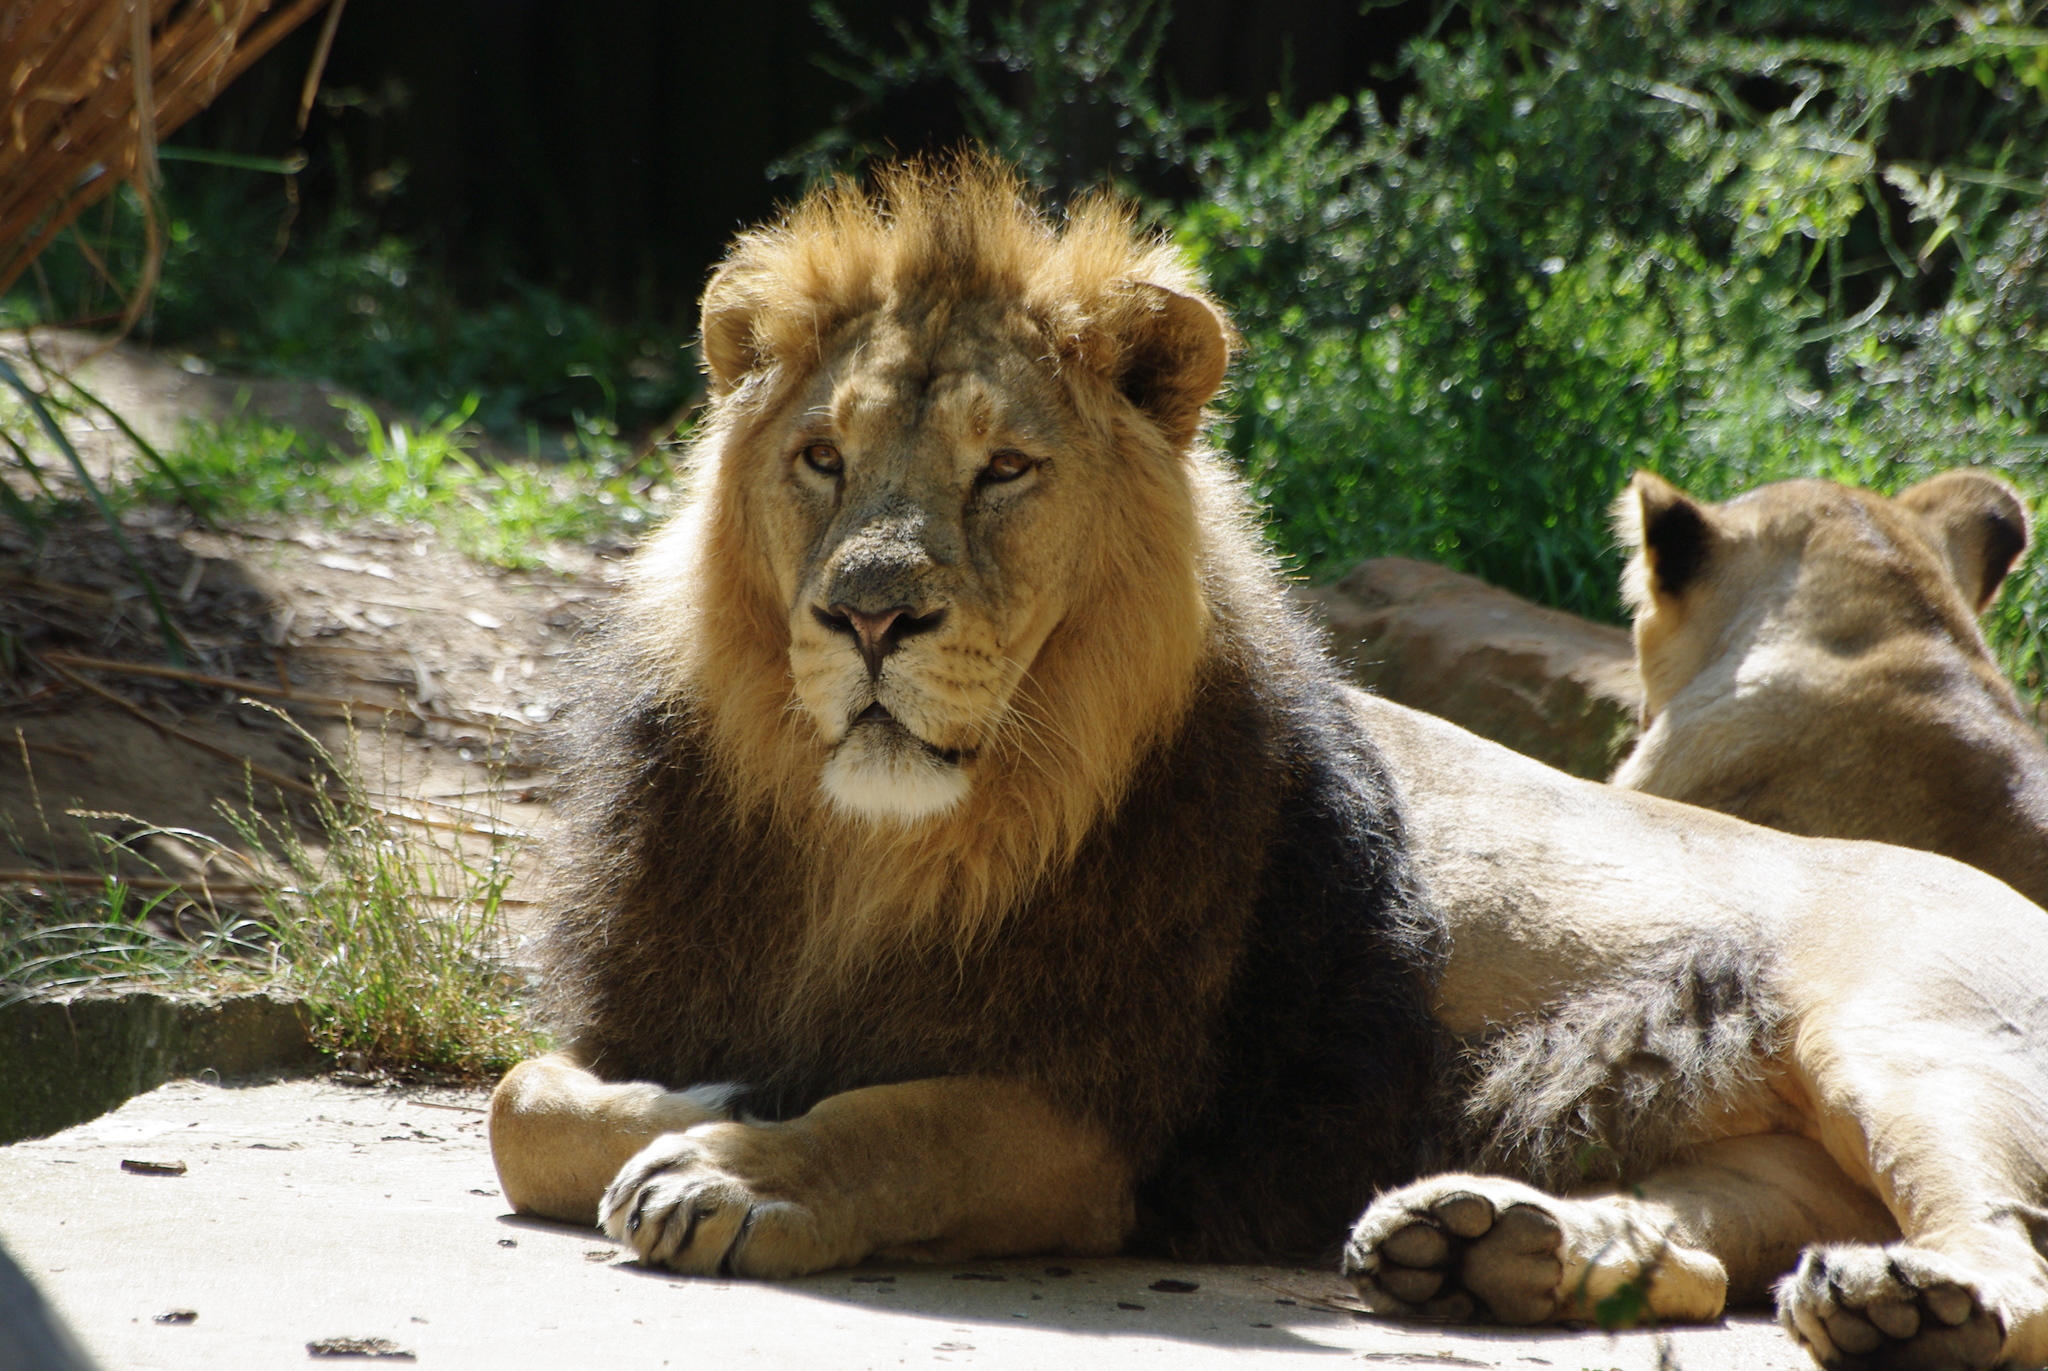 lion subspecies list